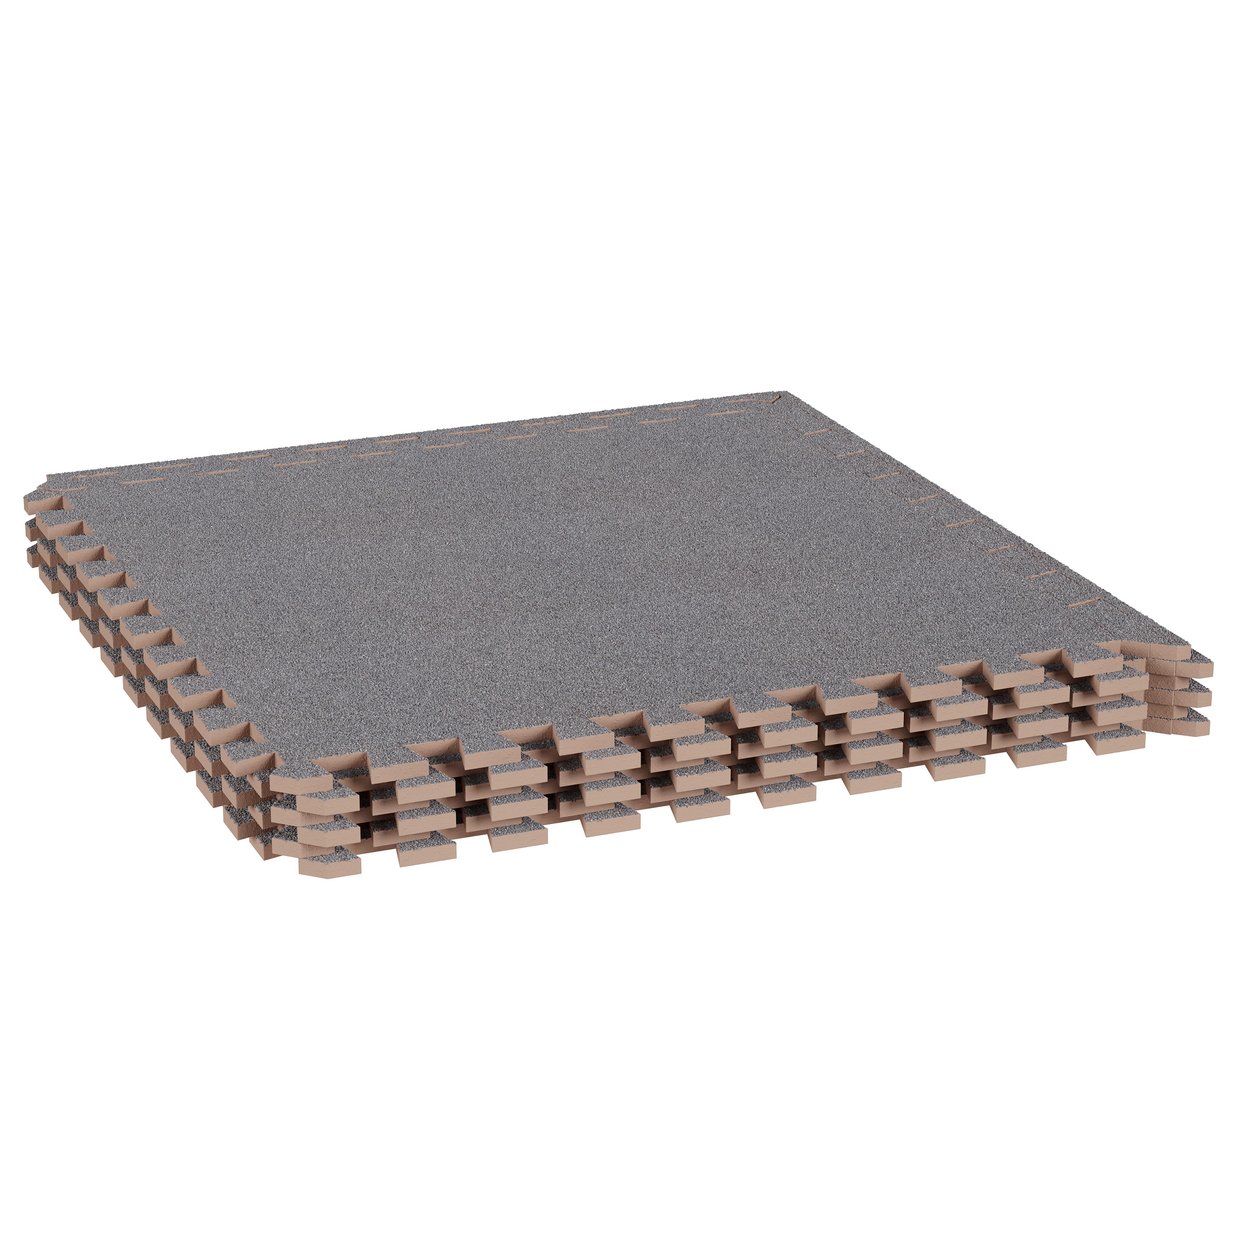 6 Pack Carpeted Interlocking Foam Floor Tiles 24 Inch Kids Garage Basement - Gray